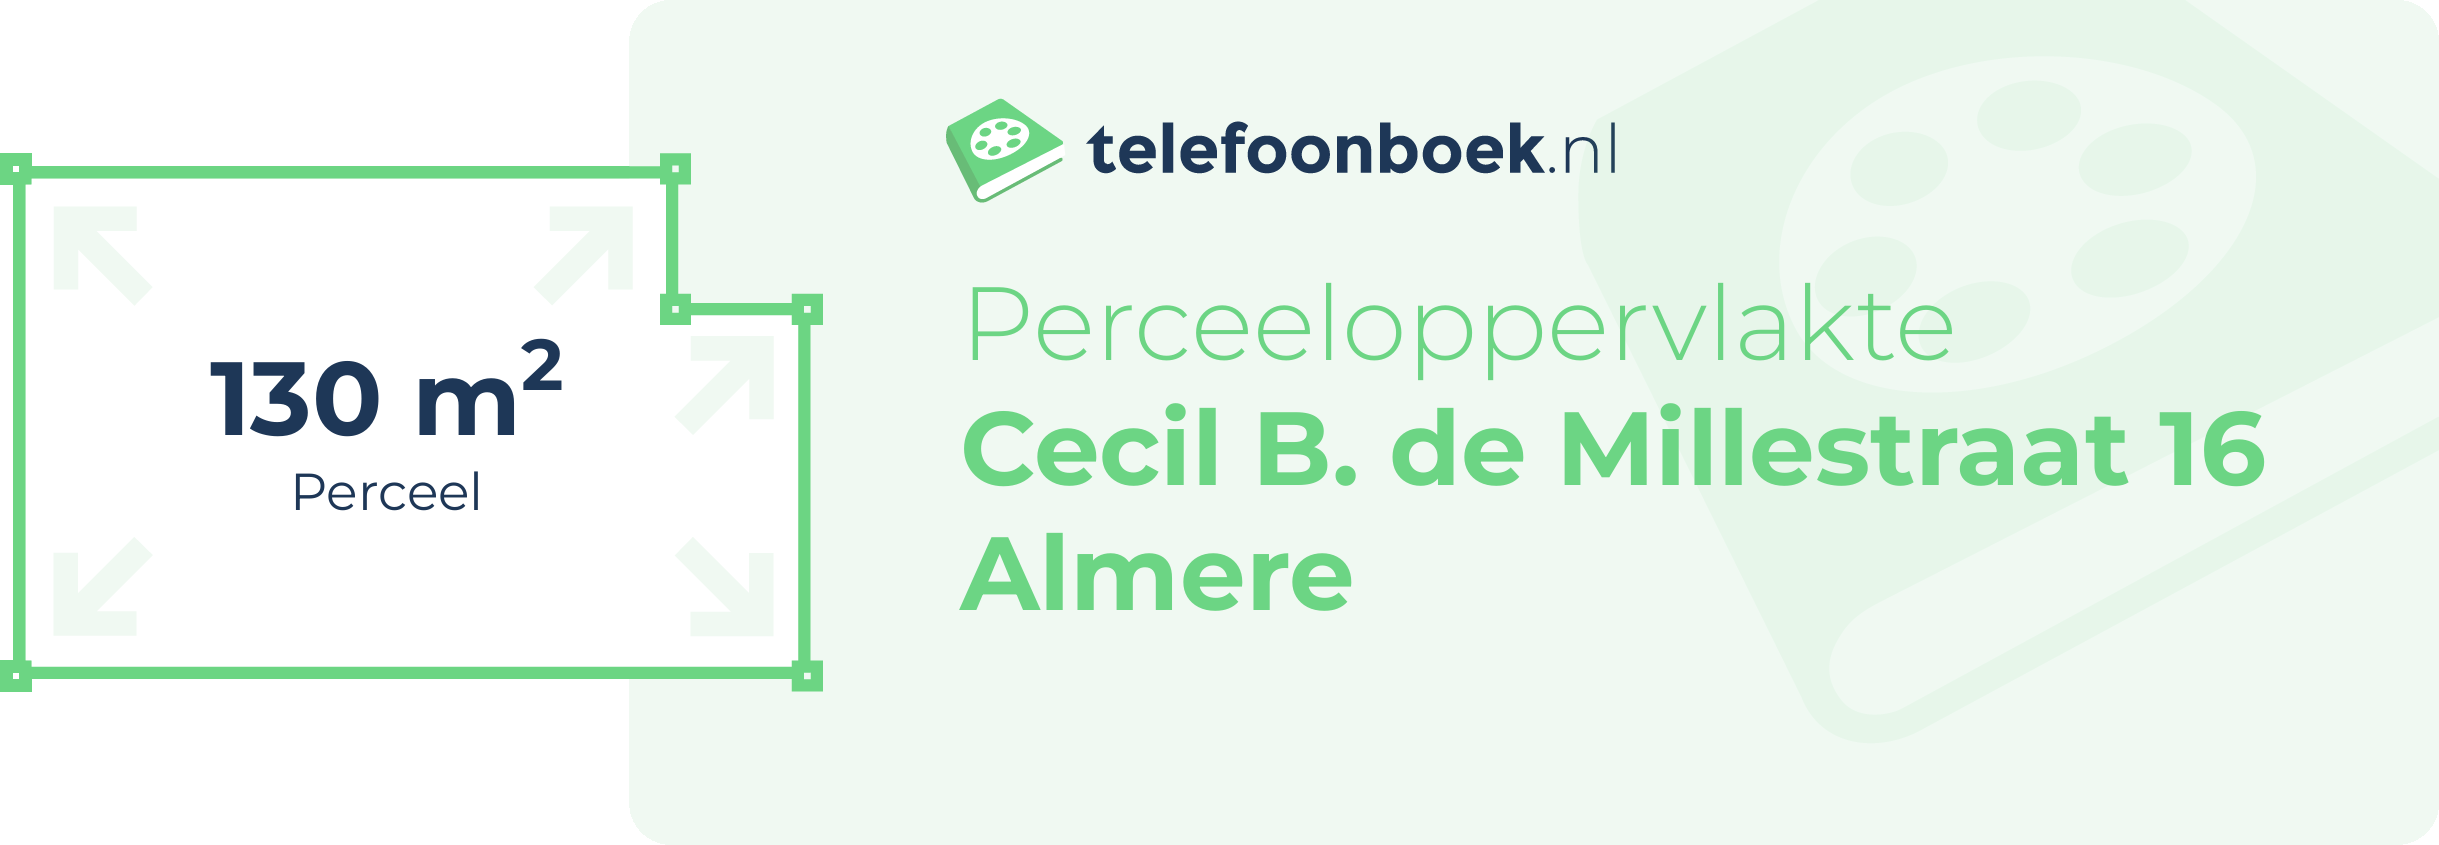 Perceeloppervlakte Cecil B. De Millestraat 16 Almere